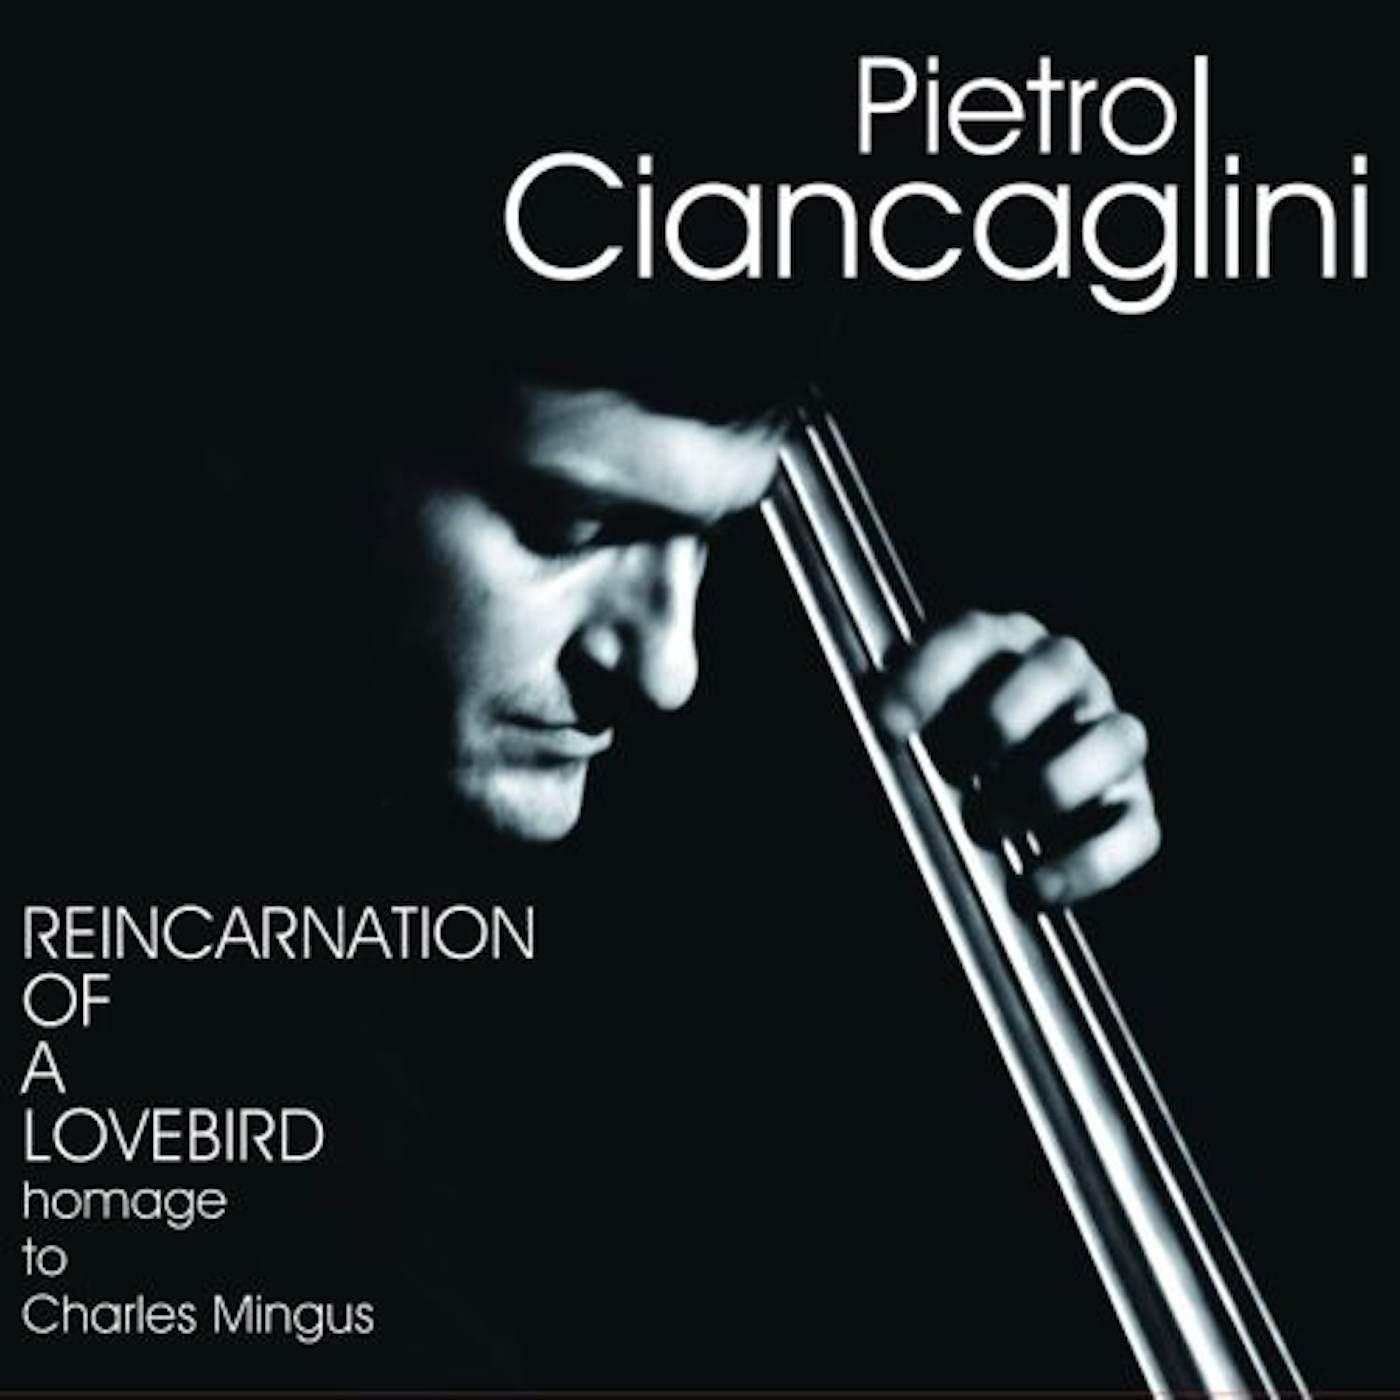 Pietro Ciancaglini REINCARNATION OF A LOVEBIRD CD